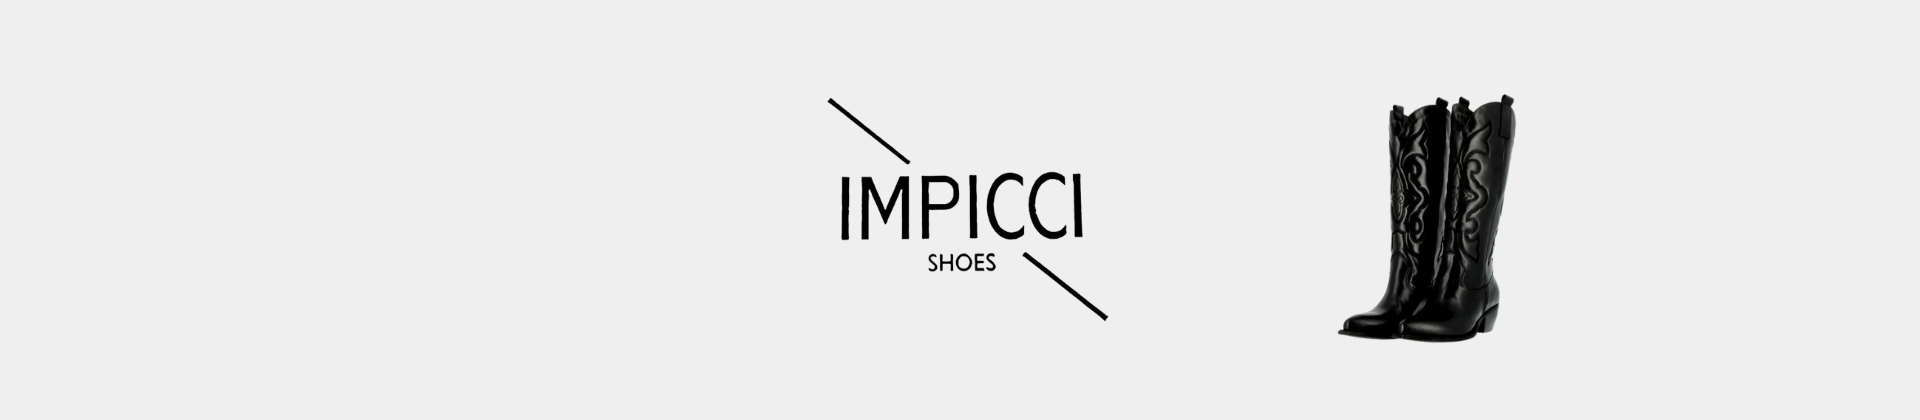 Impicci Women's Shoes Online Tronchetti